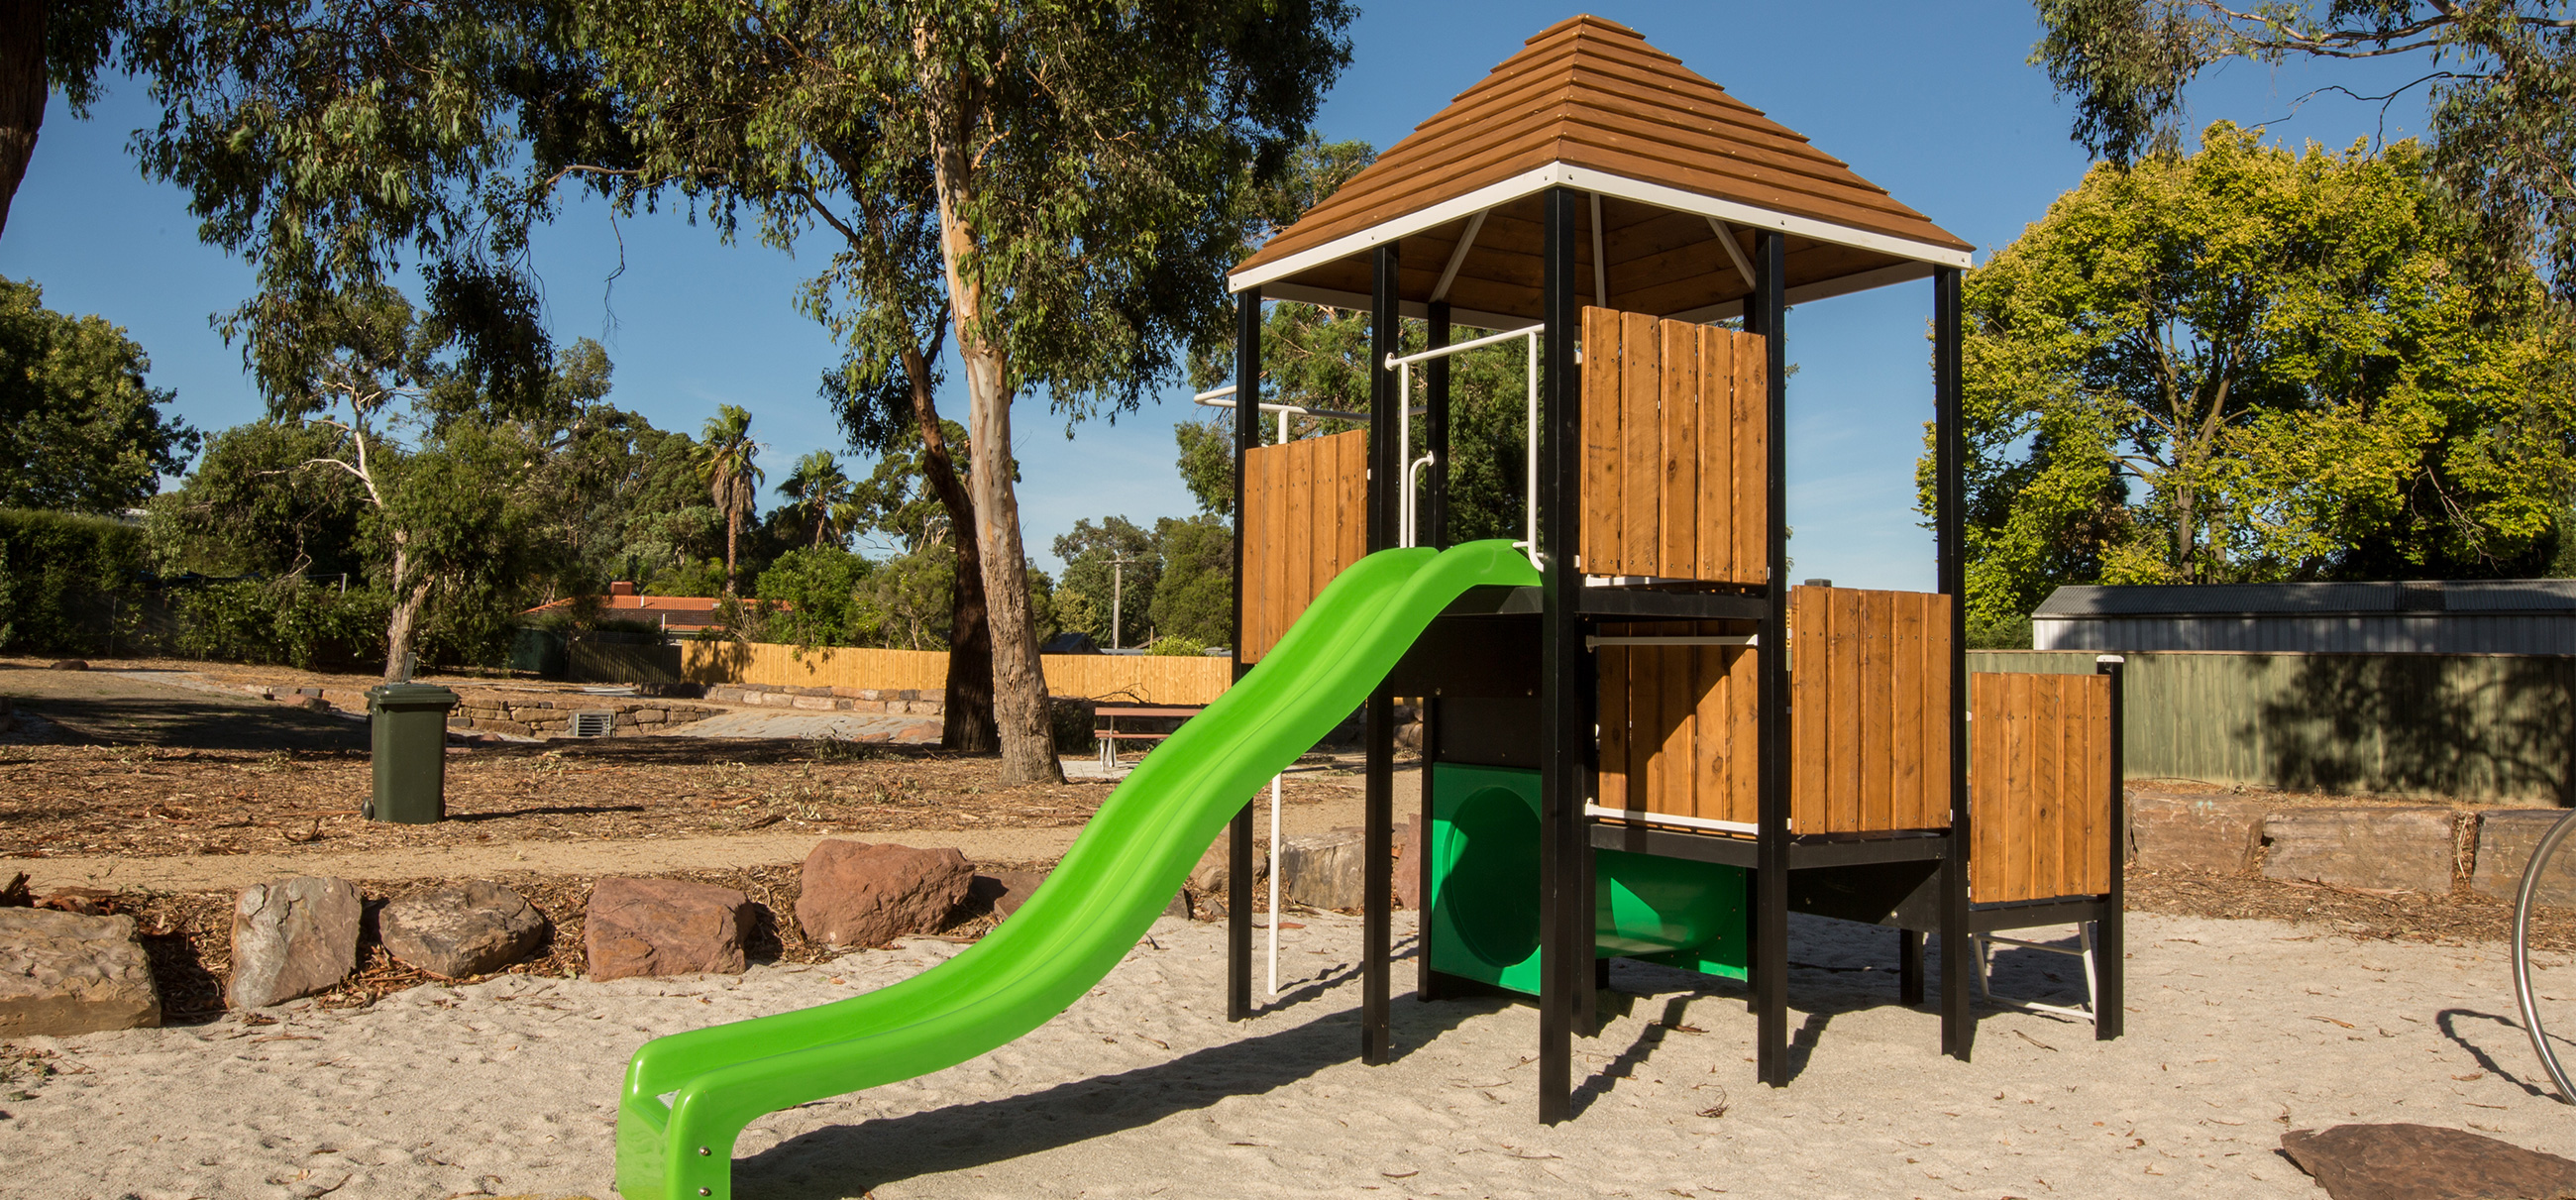 Activity Playgrounds | Playground Equipment Melbourne